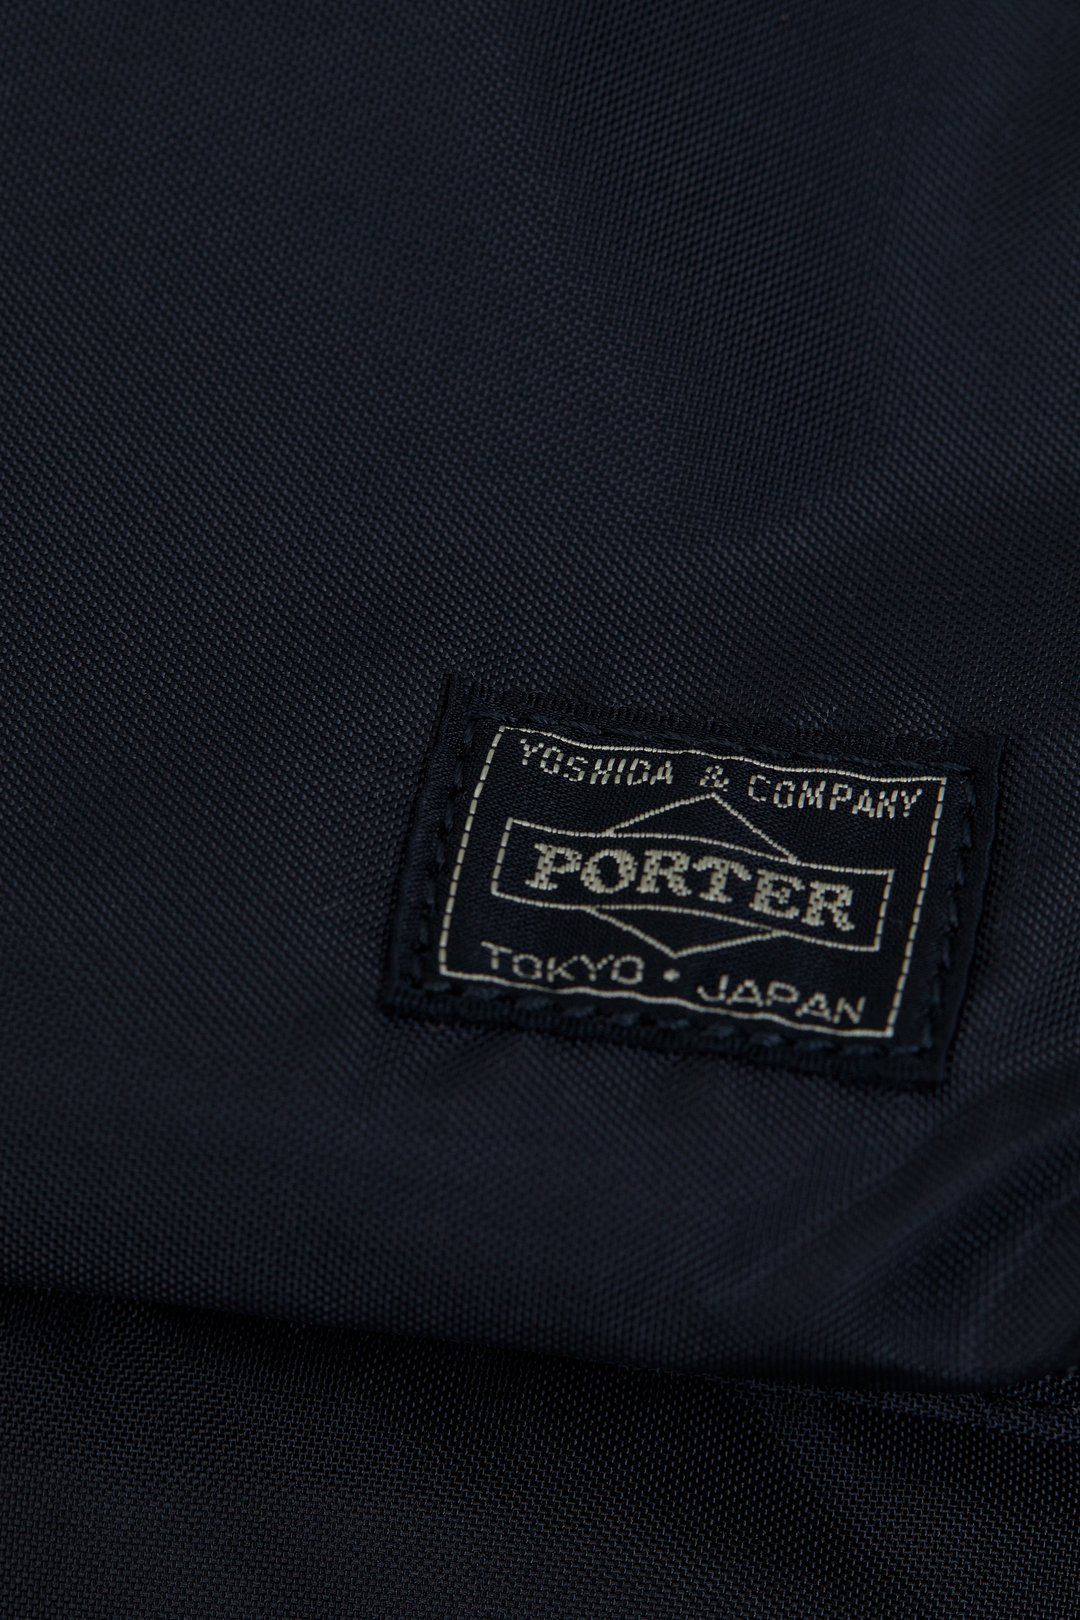 Porter-Yoshida & Co. FORCE SHOULDER POUCH Black - Black